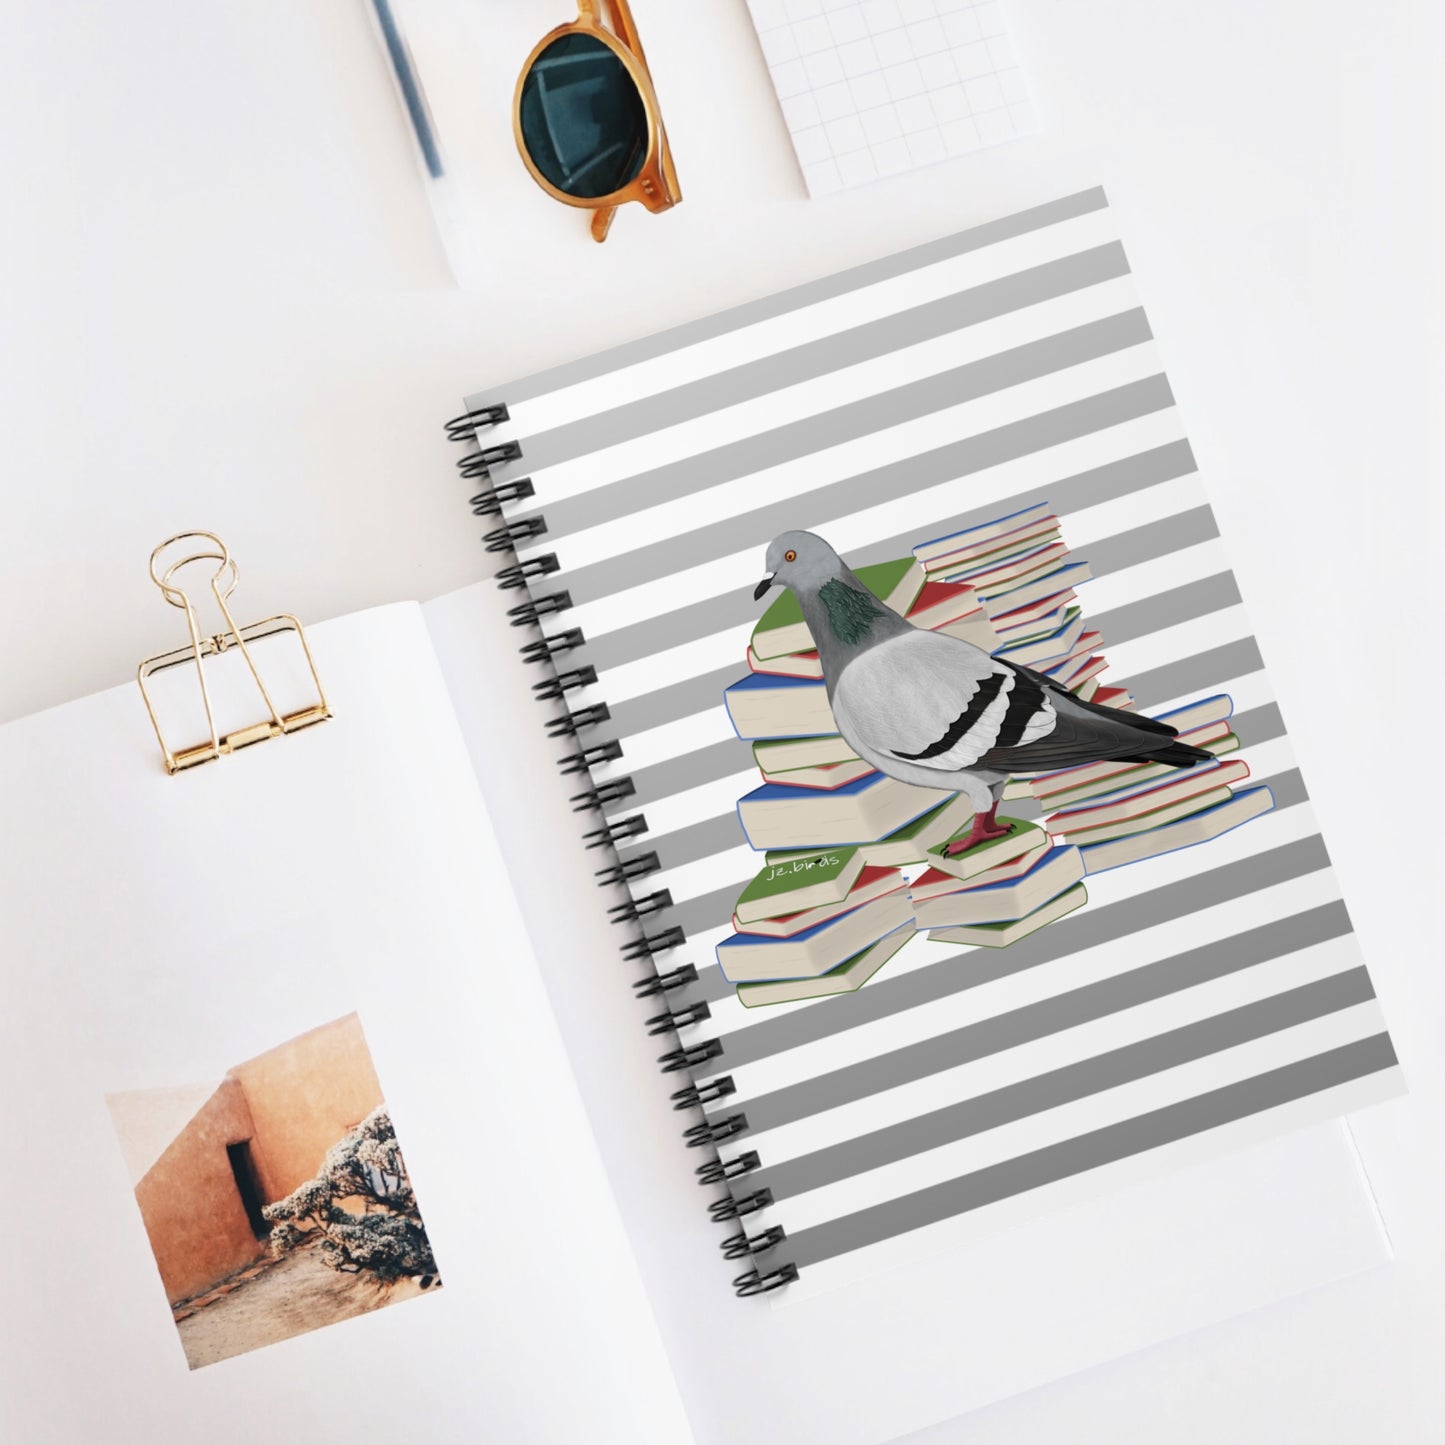 Pigeon Bird with Books Birdlover Bookworm Spiral Notebook Ruled Line